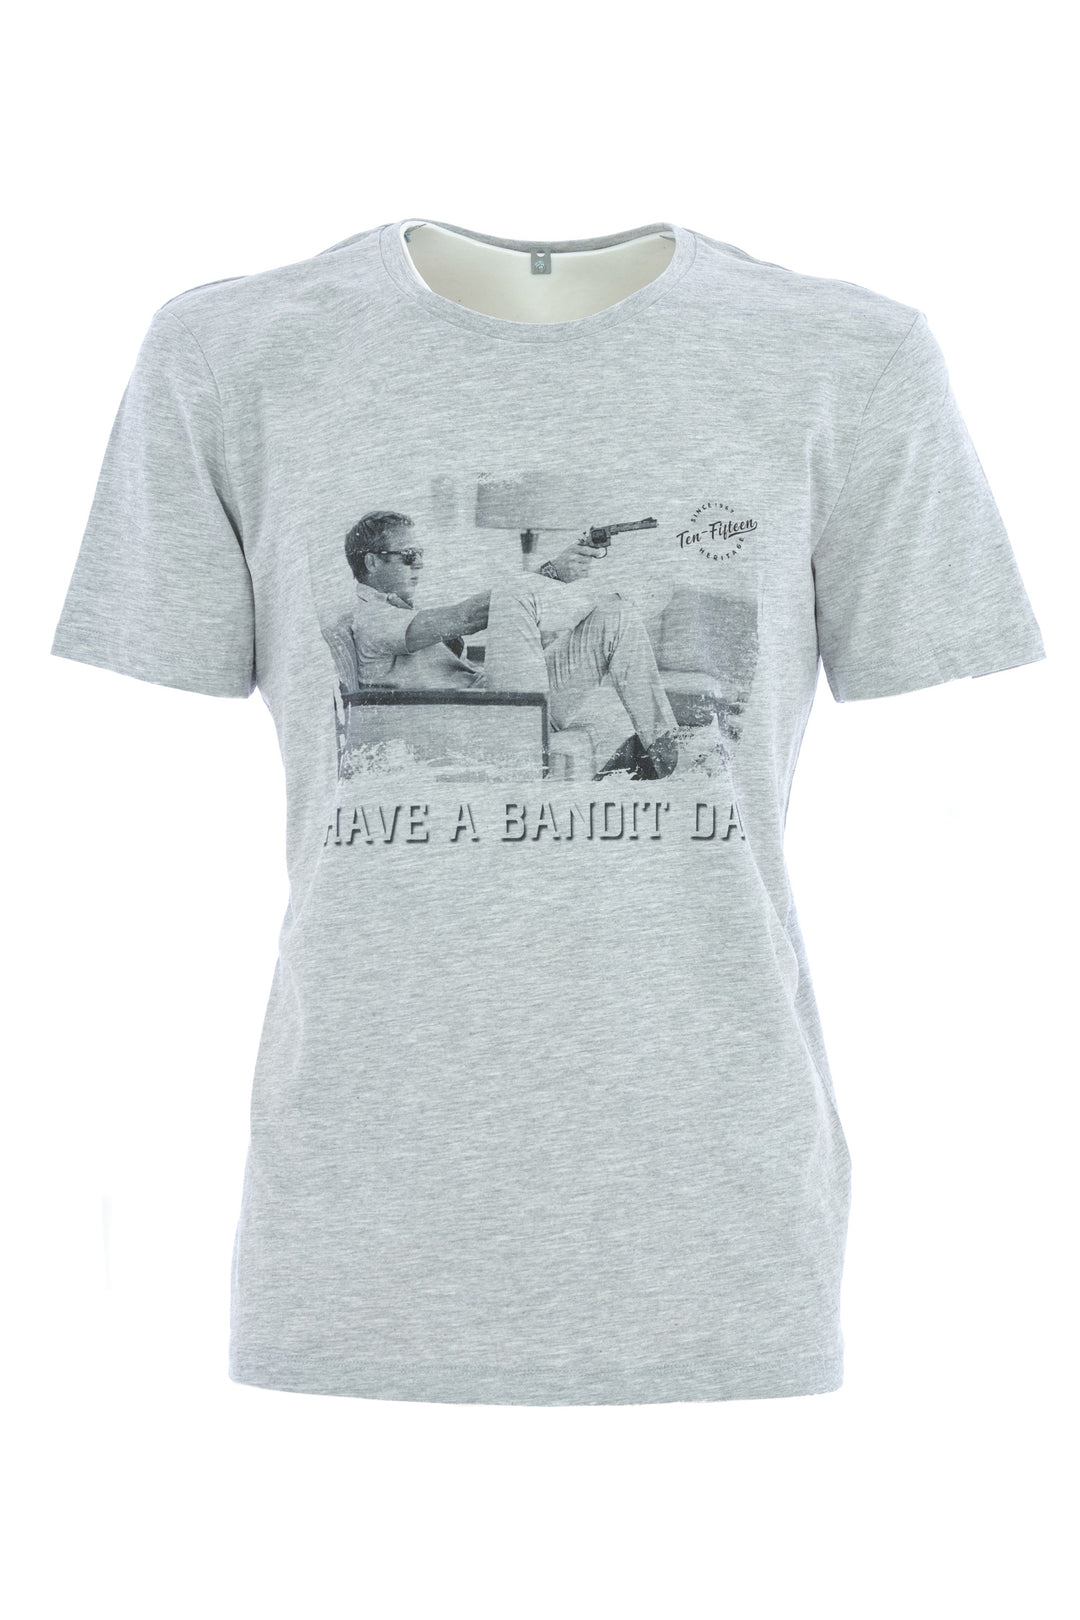 TEN-FIFTEEN T-shirt grigia in cotone con stampa bandit - Mancinelli 1954